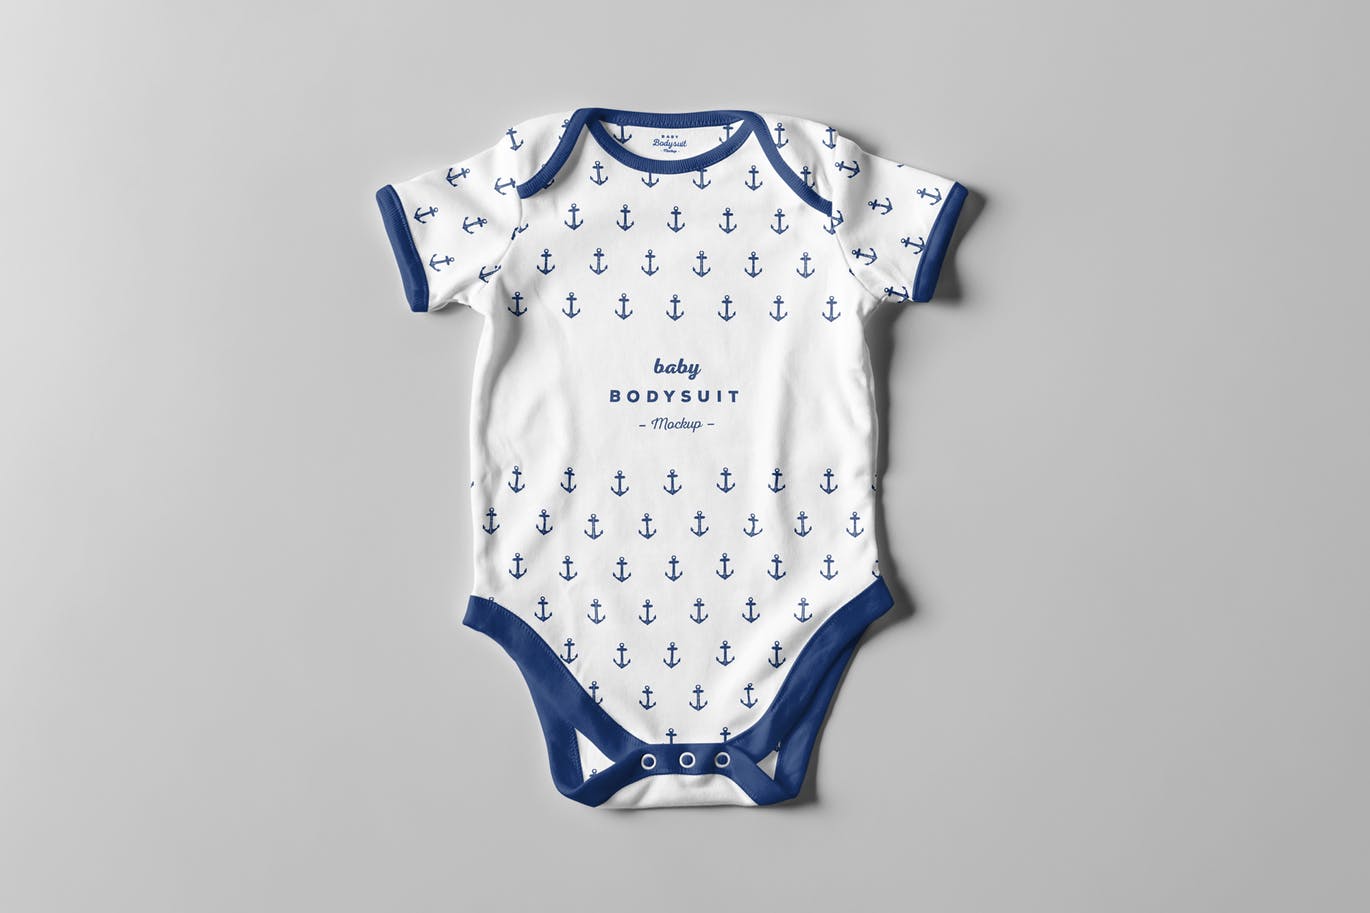 Baby bodysuit mockup templates